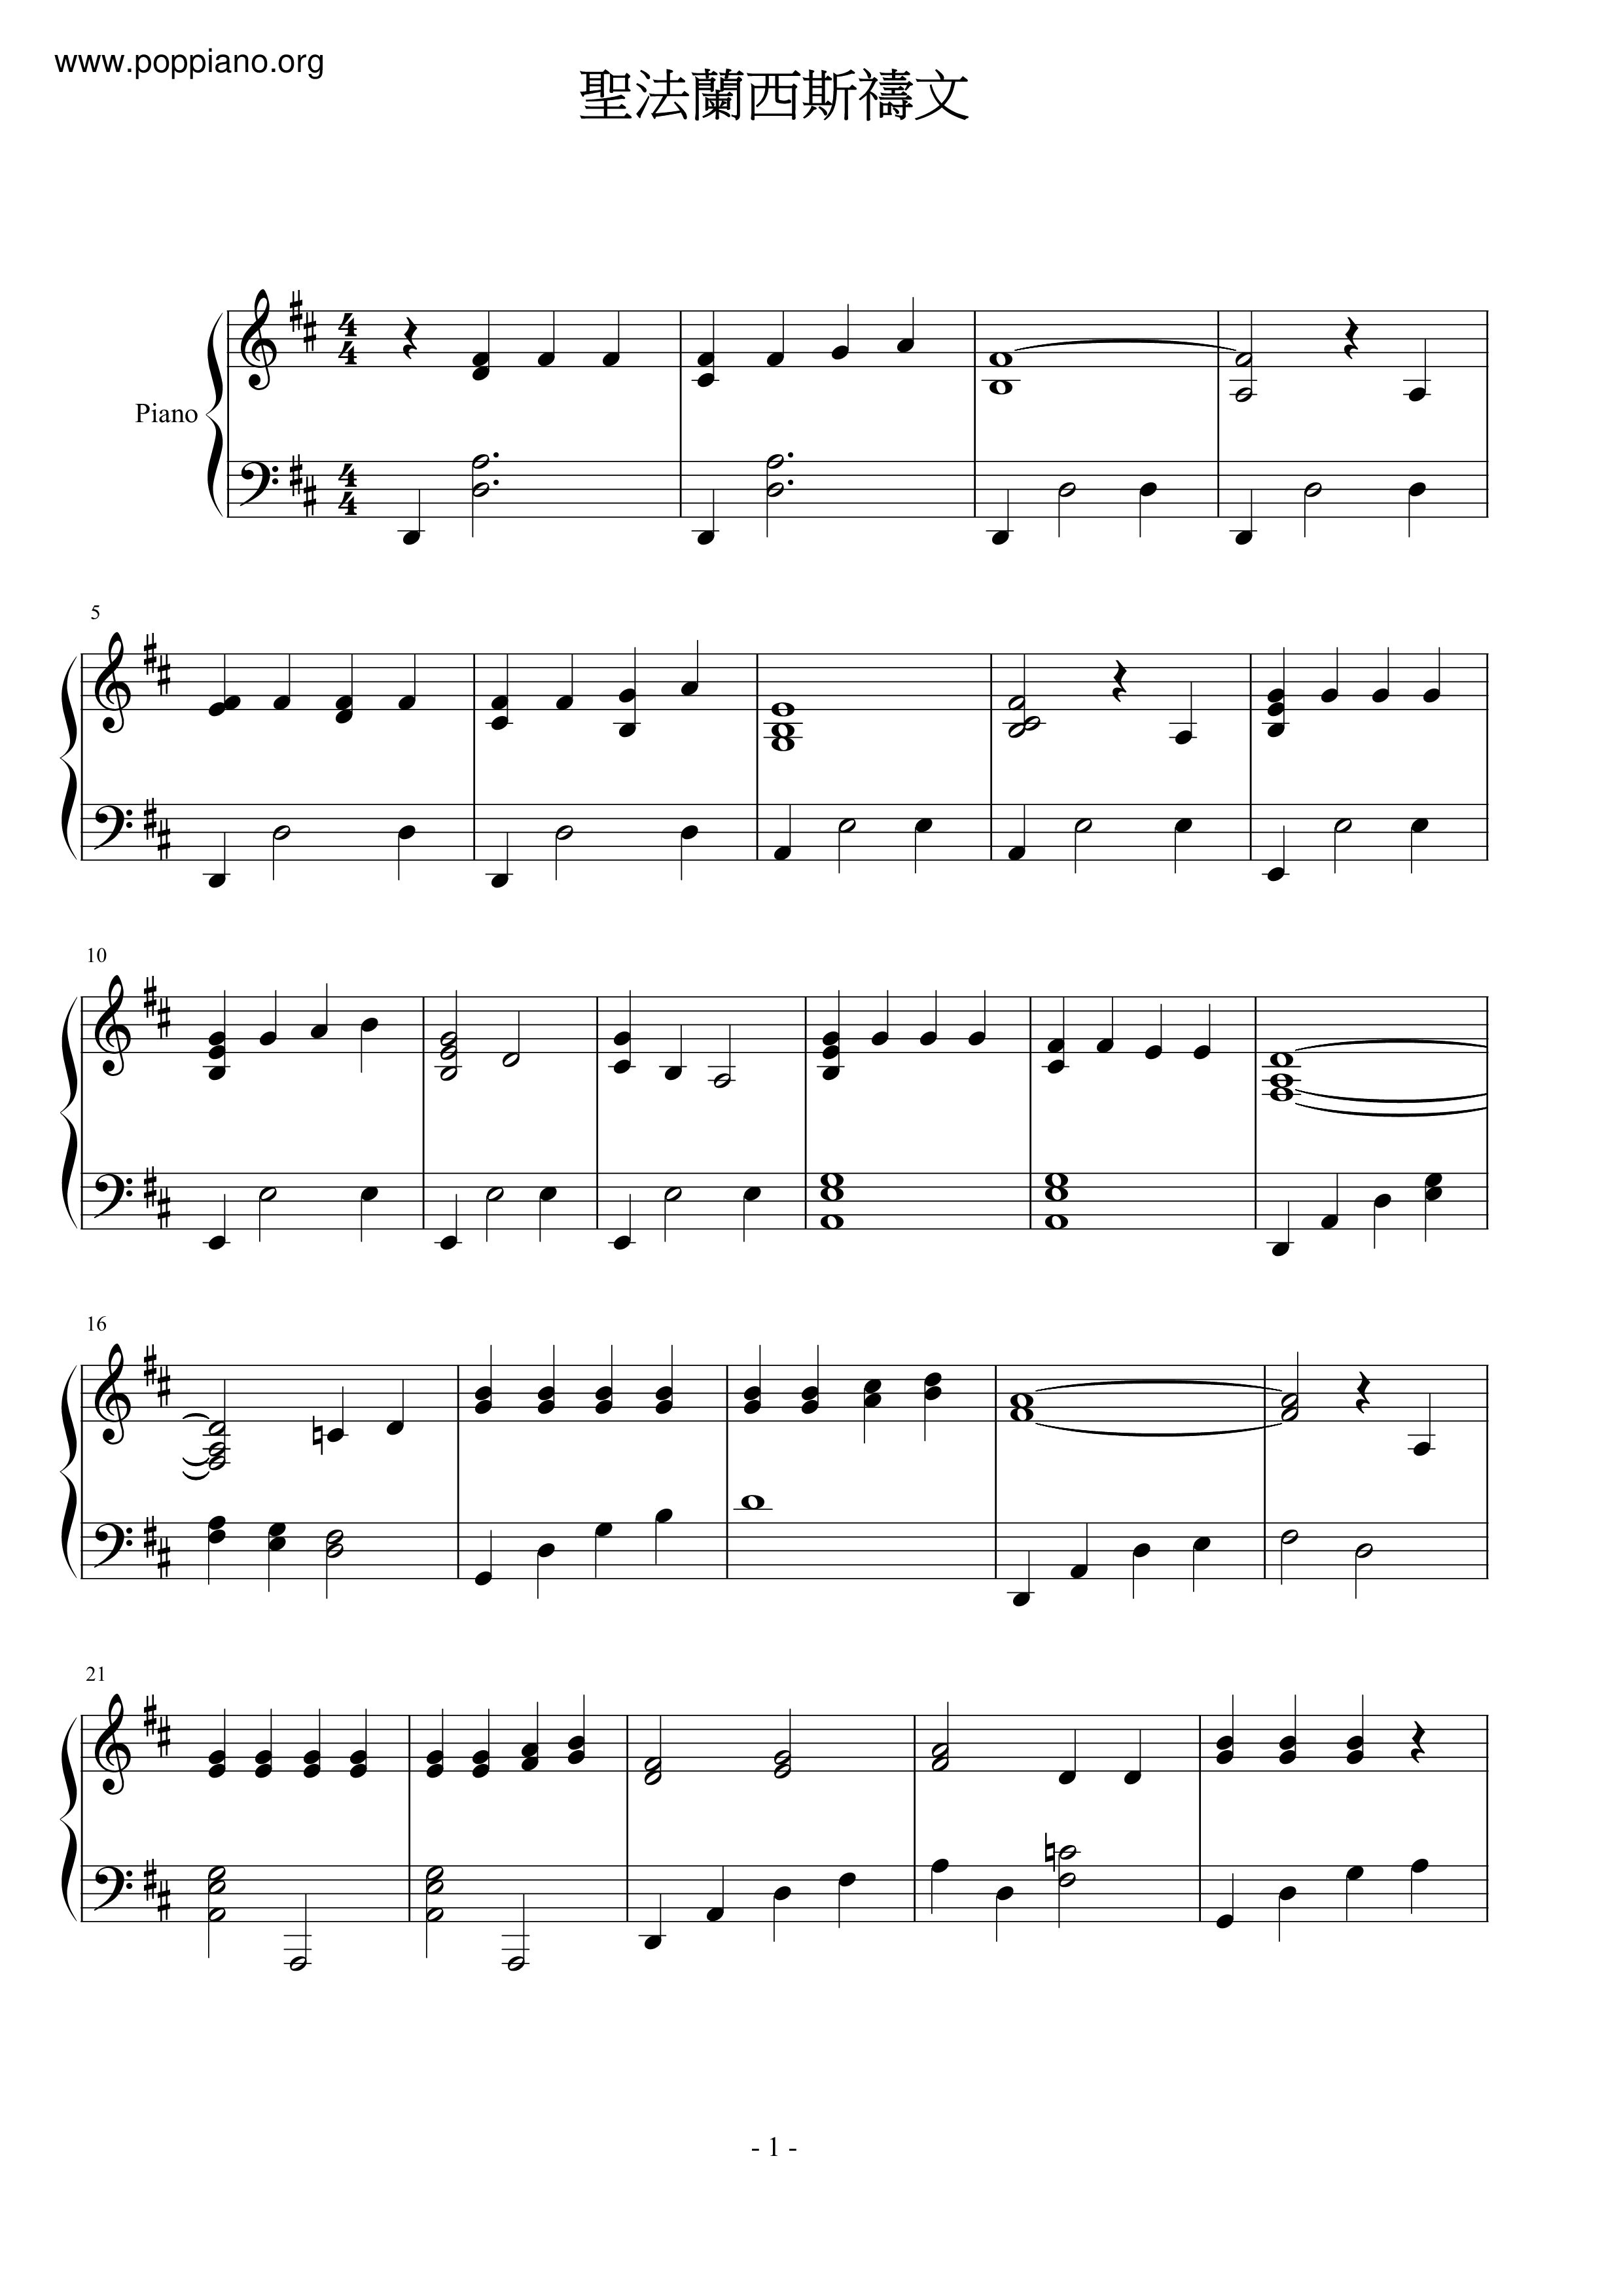 hymn-the-prayer-of-saint-francis-sheet-music-pdf-free-score-download